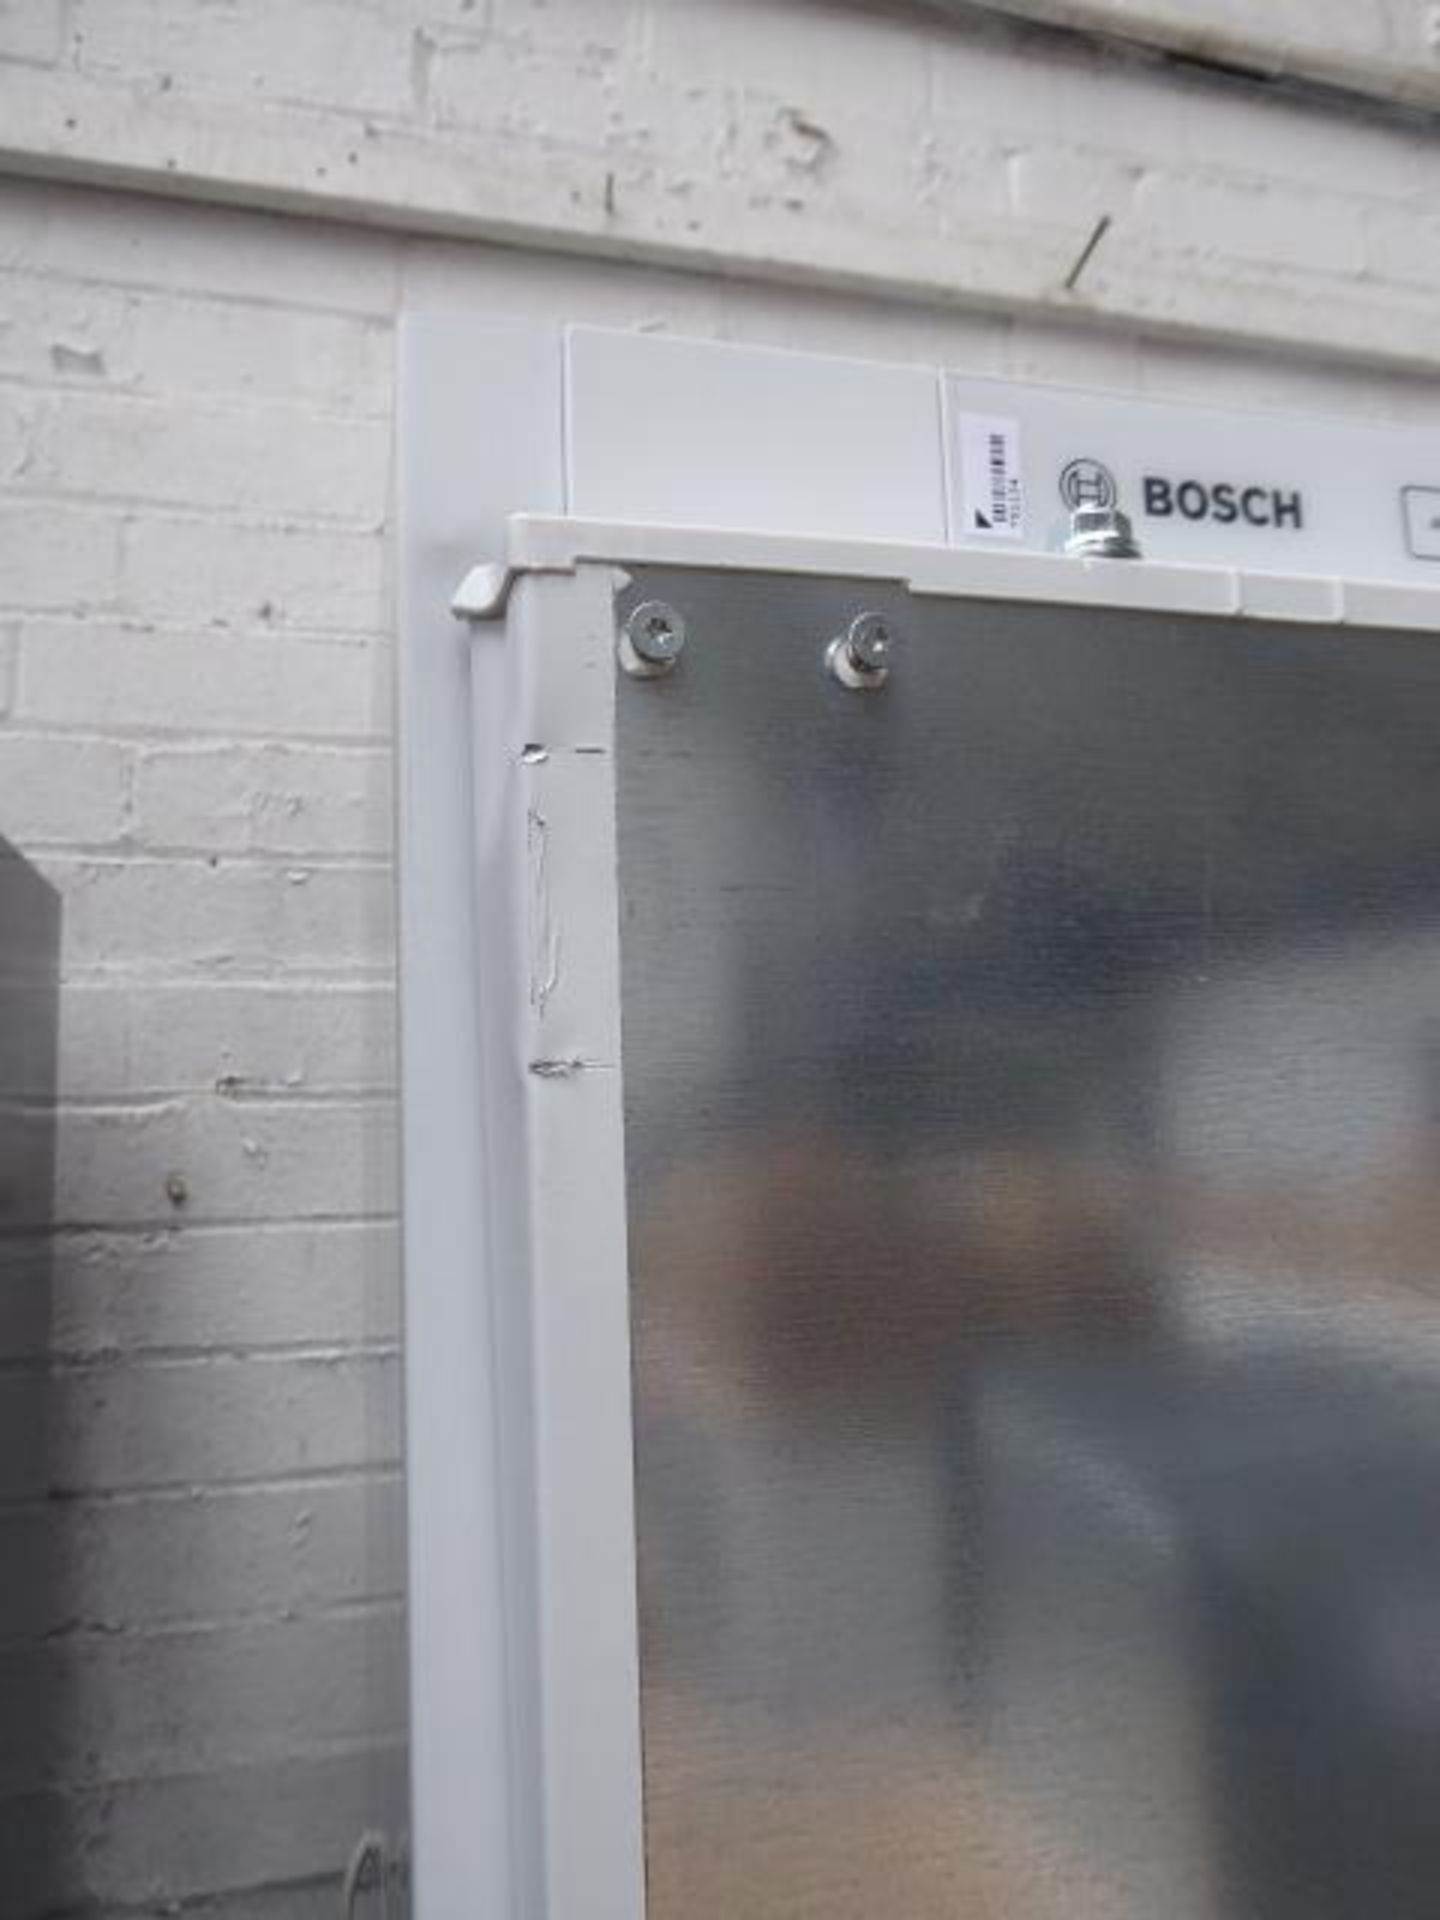 KIR81AFE0GB Bosch Built-in larder fridge - Image 3 of 3